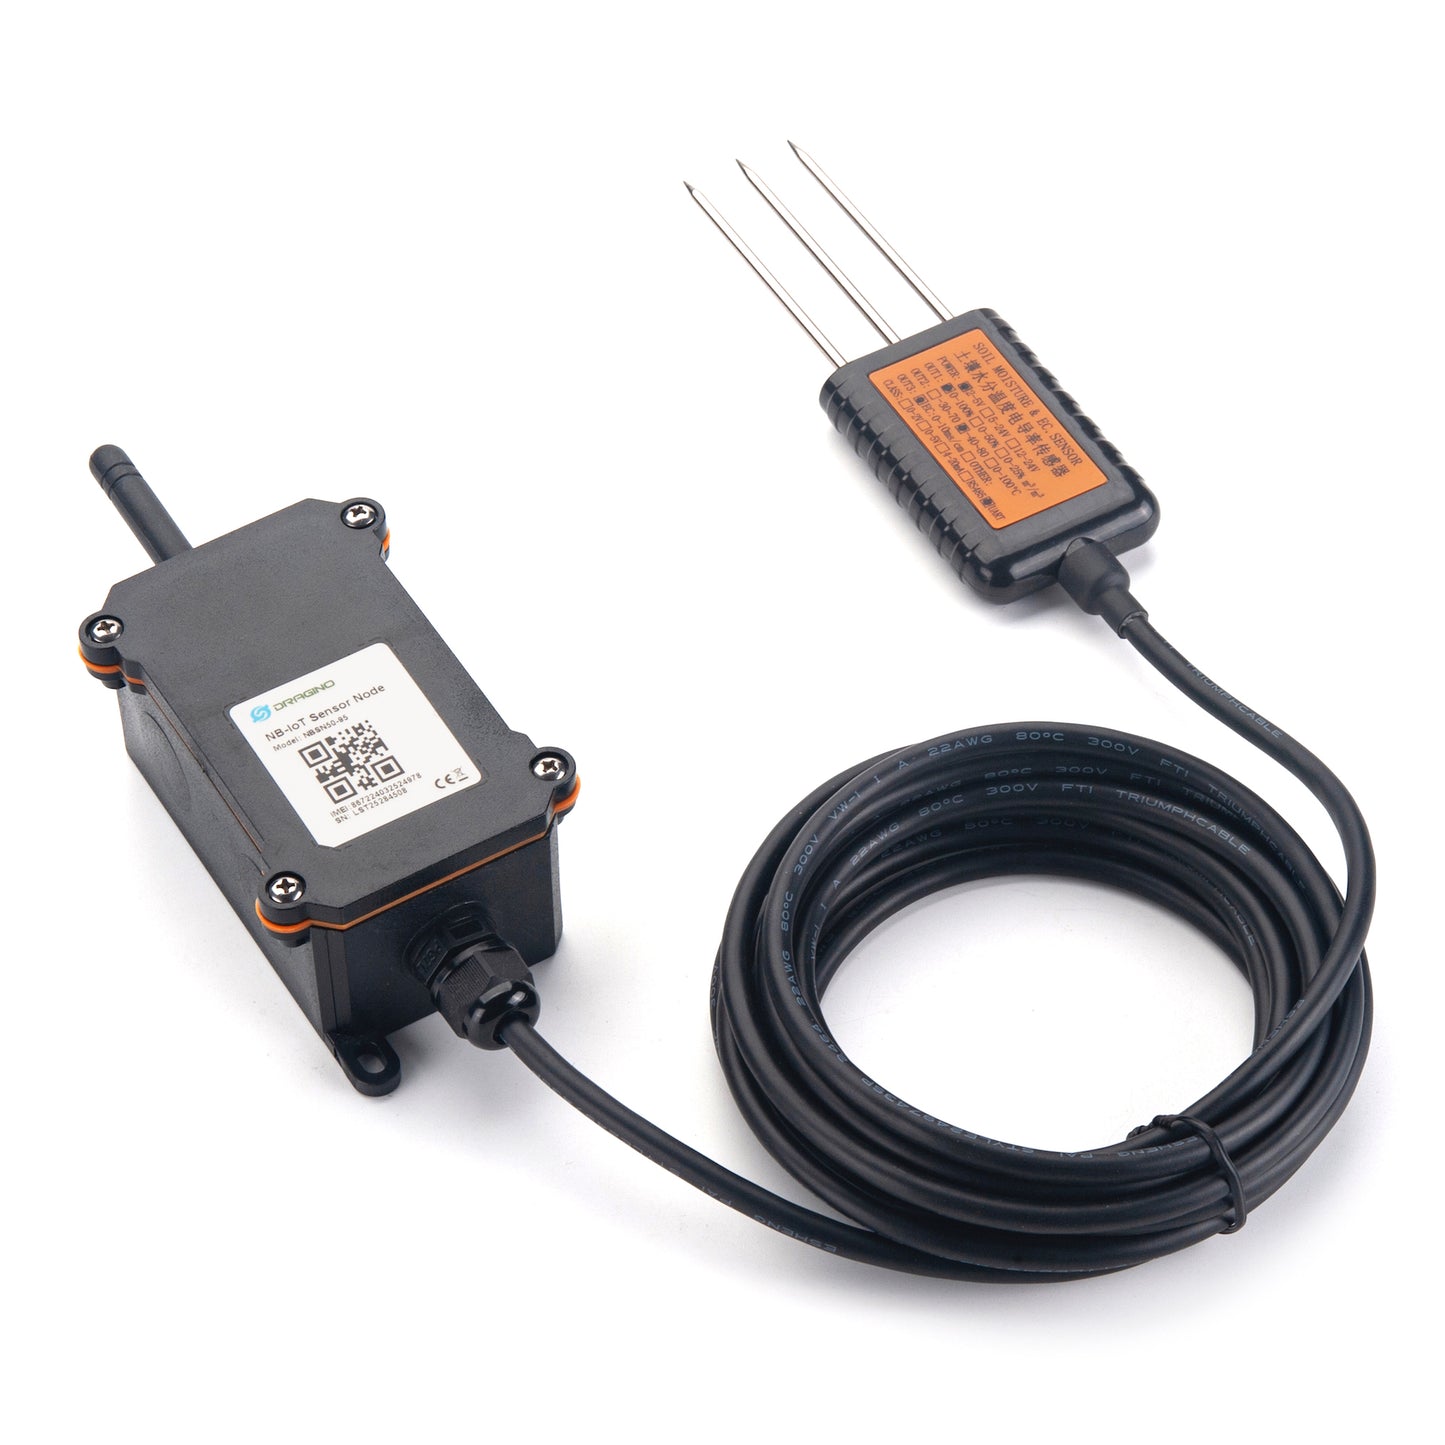 NBSN95 Long Range Wireless NB-IoT Sensor Node